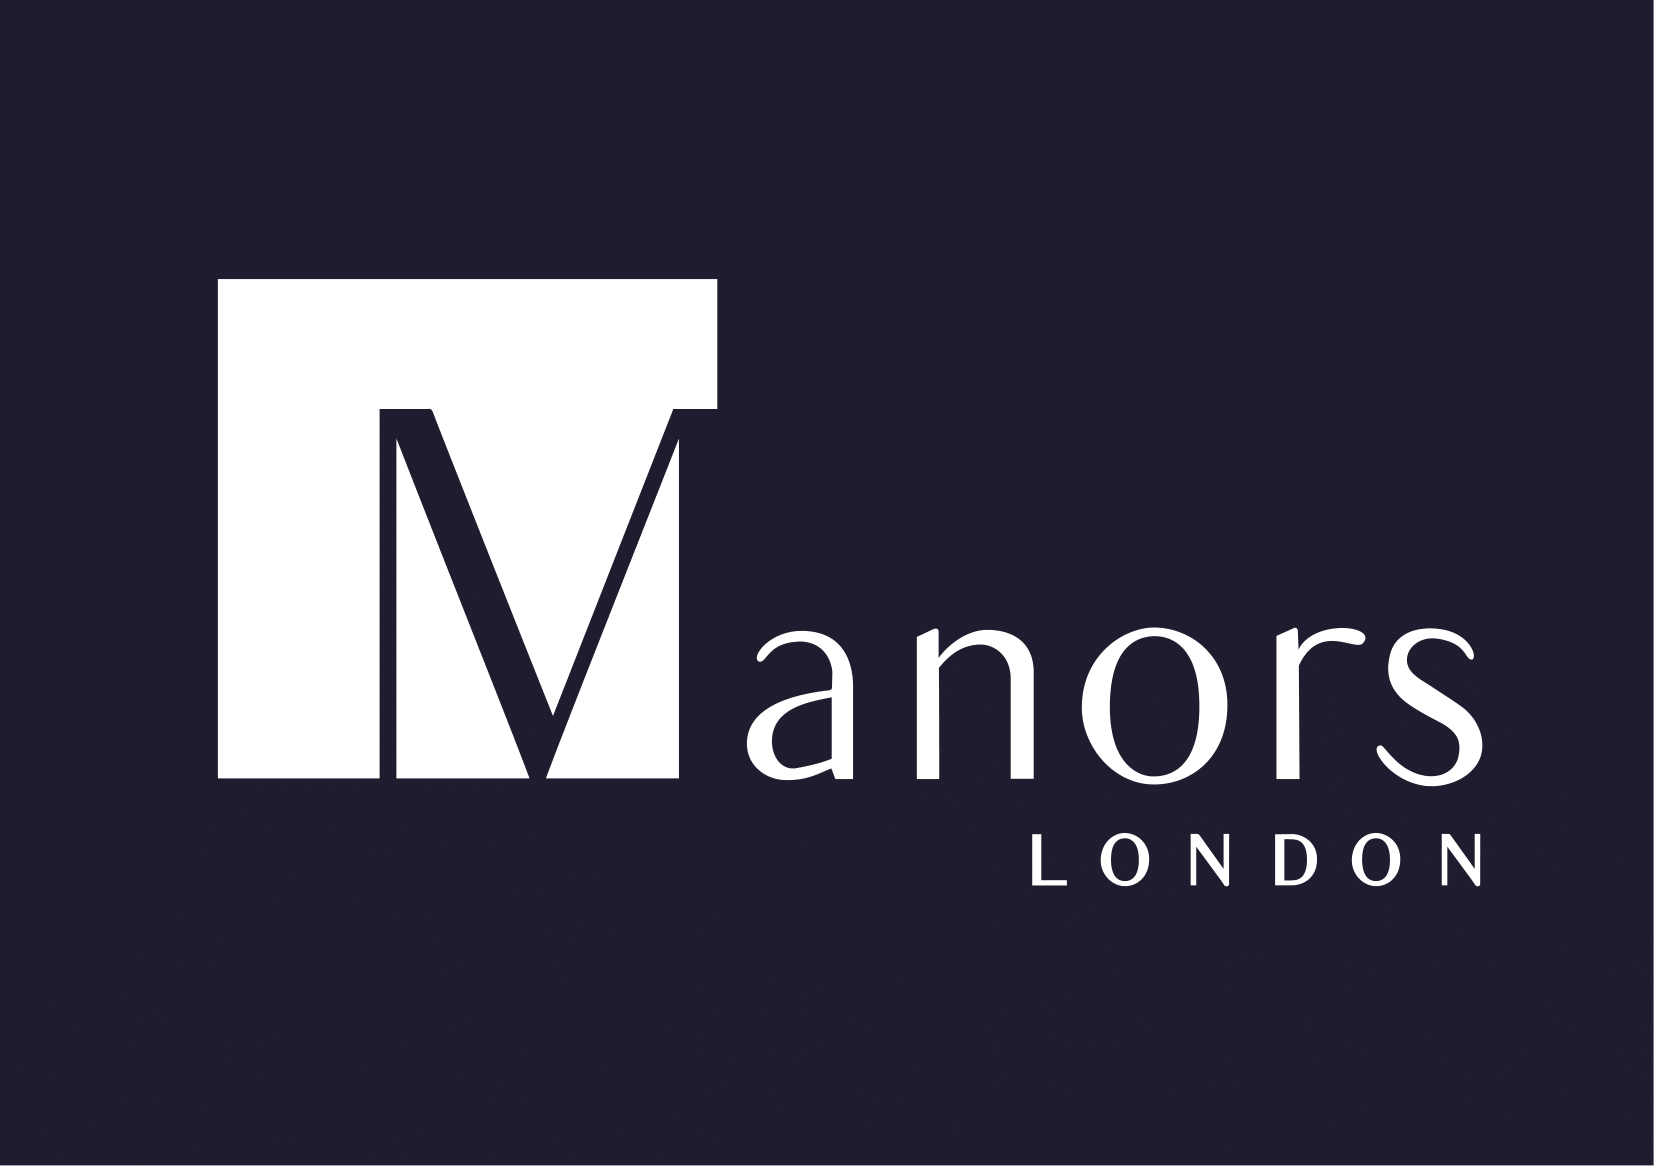 Manors